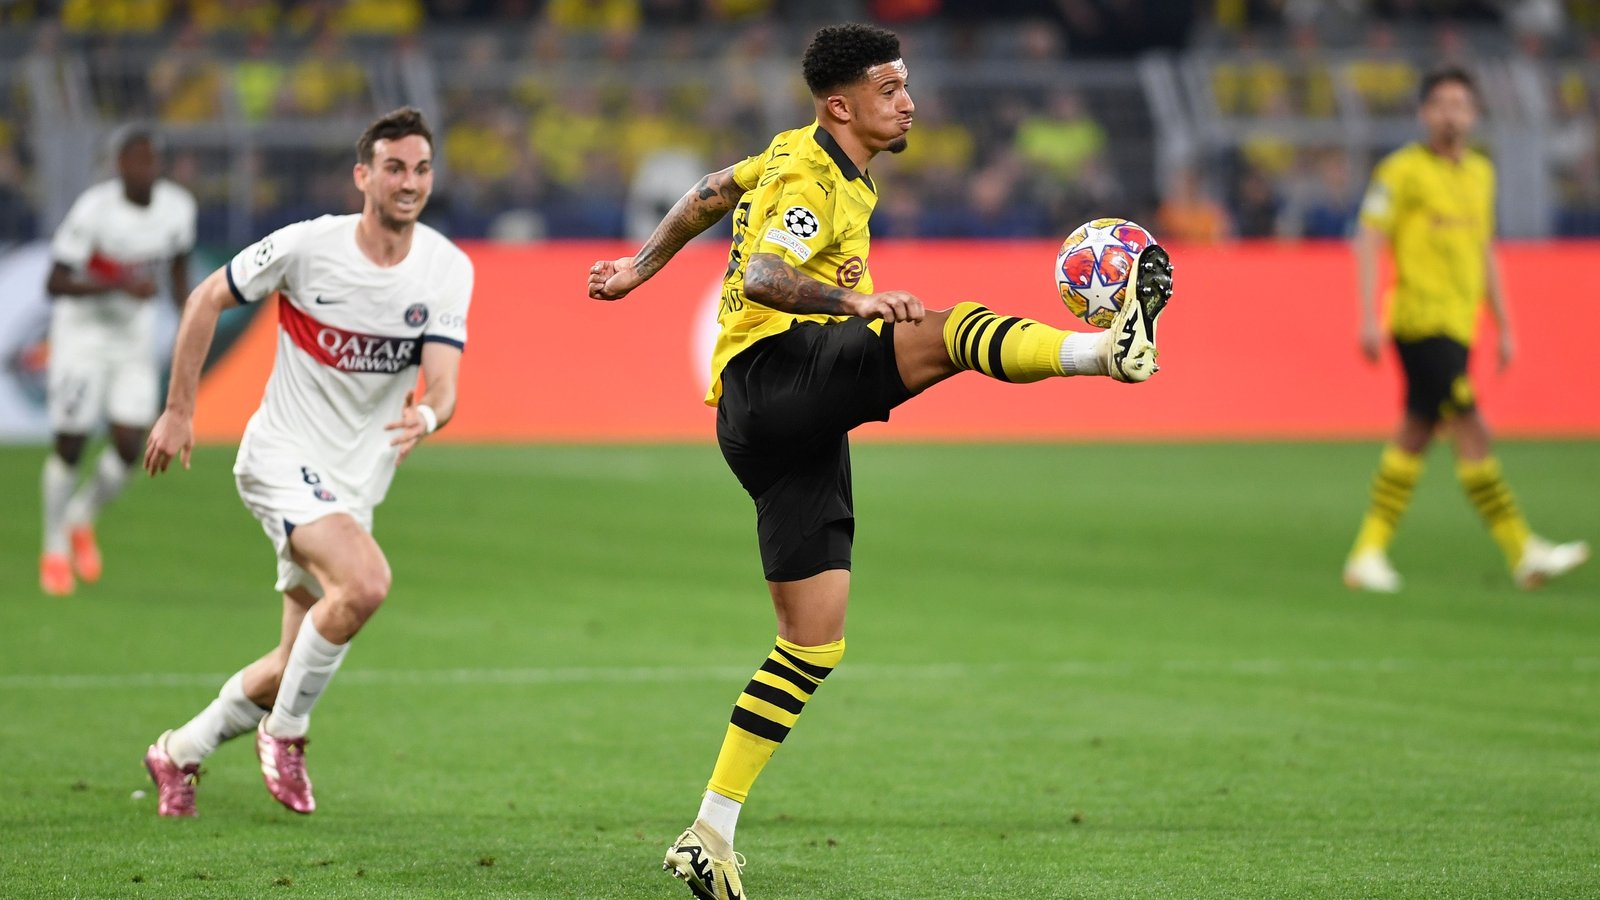 Dortmund boss Terzic not surprised by Sancho's quality